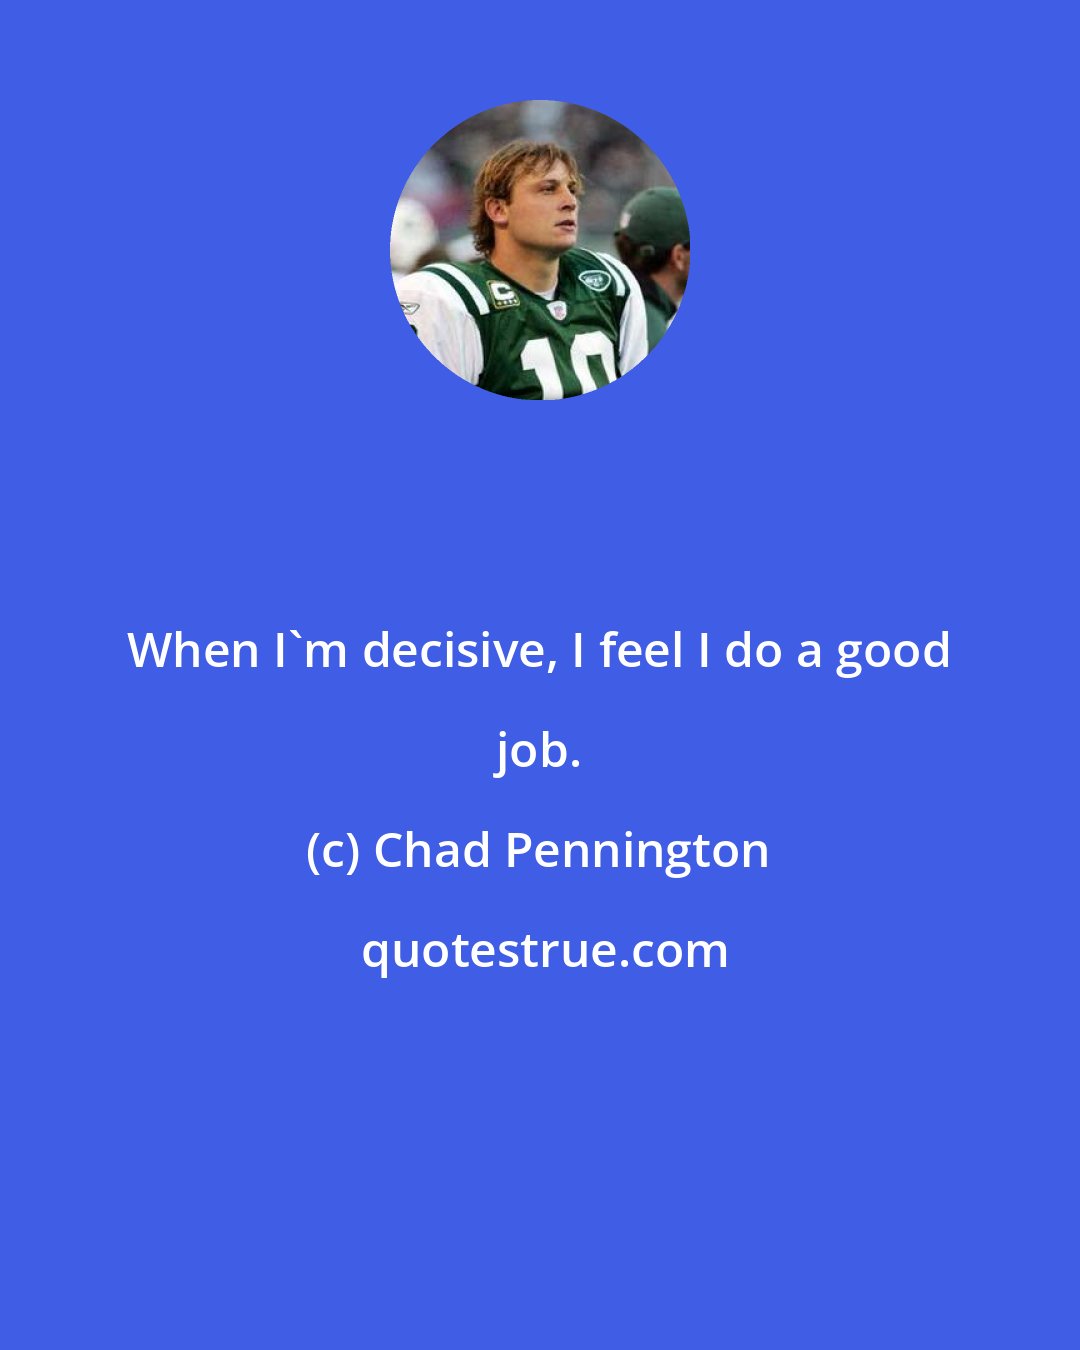 Chad Pennington: When I'm decisive, I feel I do a good job.